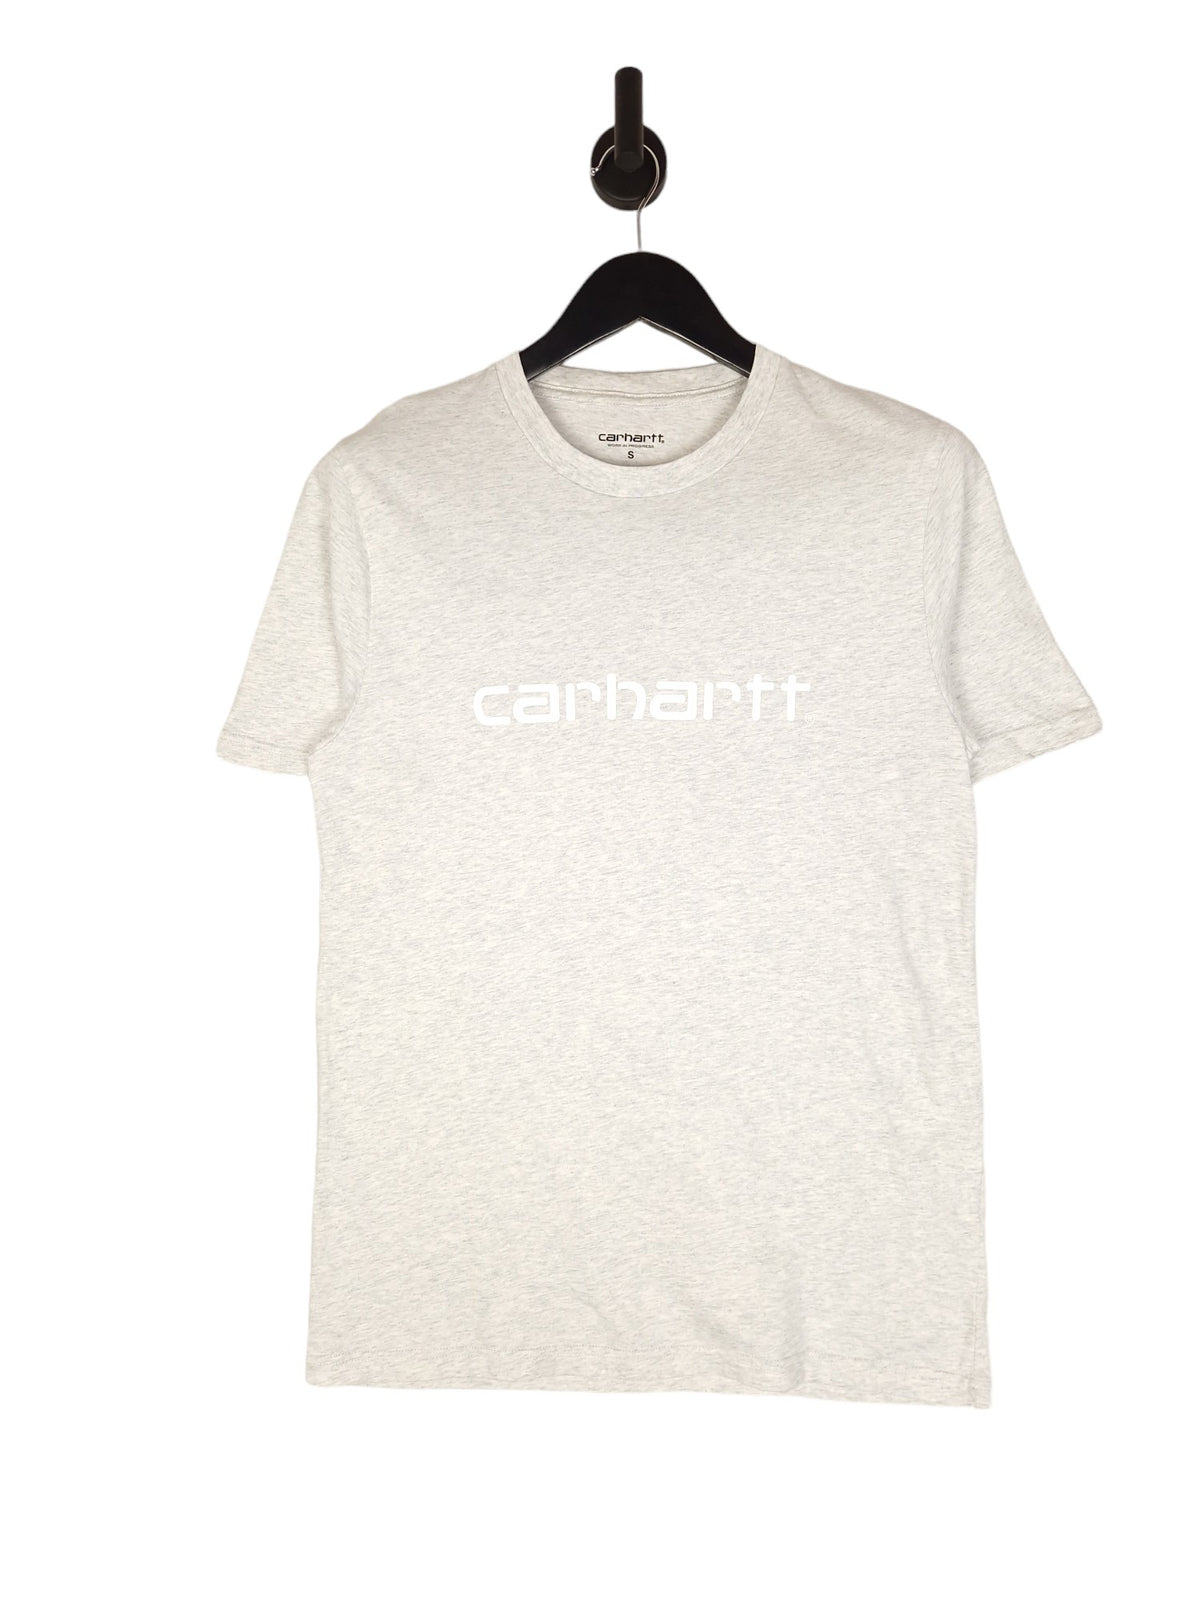 Carhartt Spell Out Short Sleeve T-Shirt - Size Small